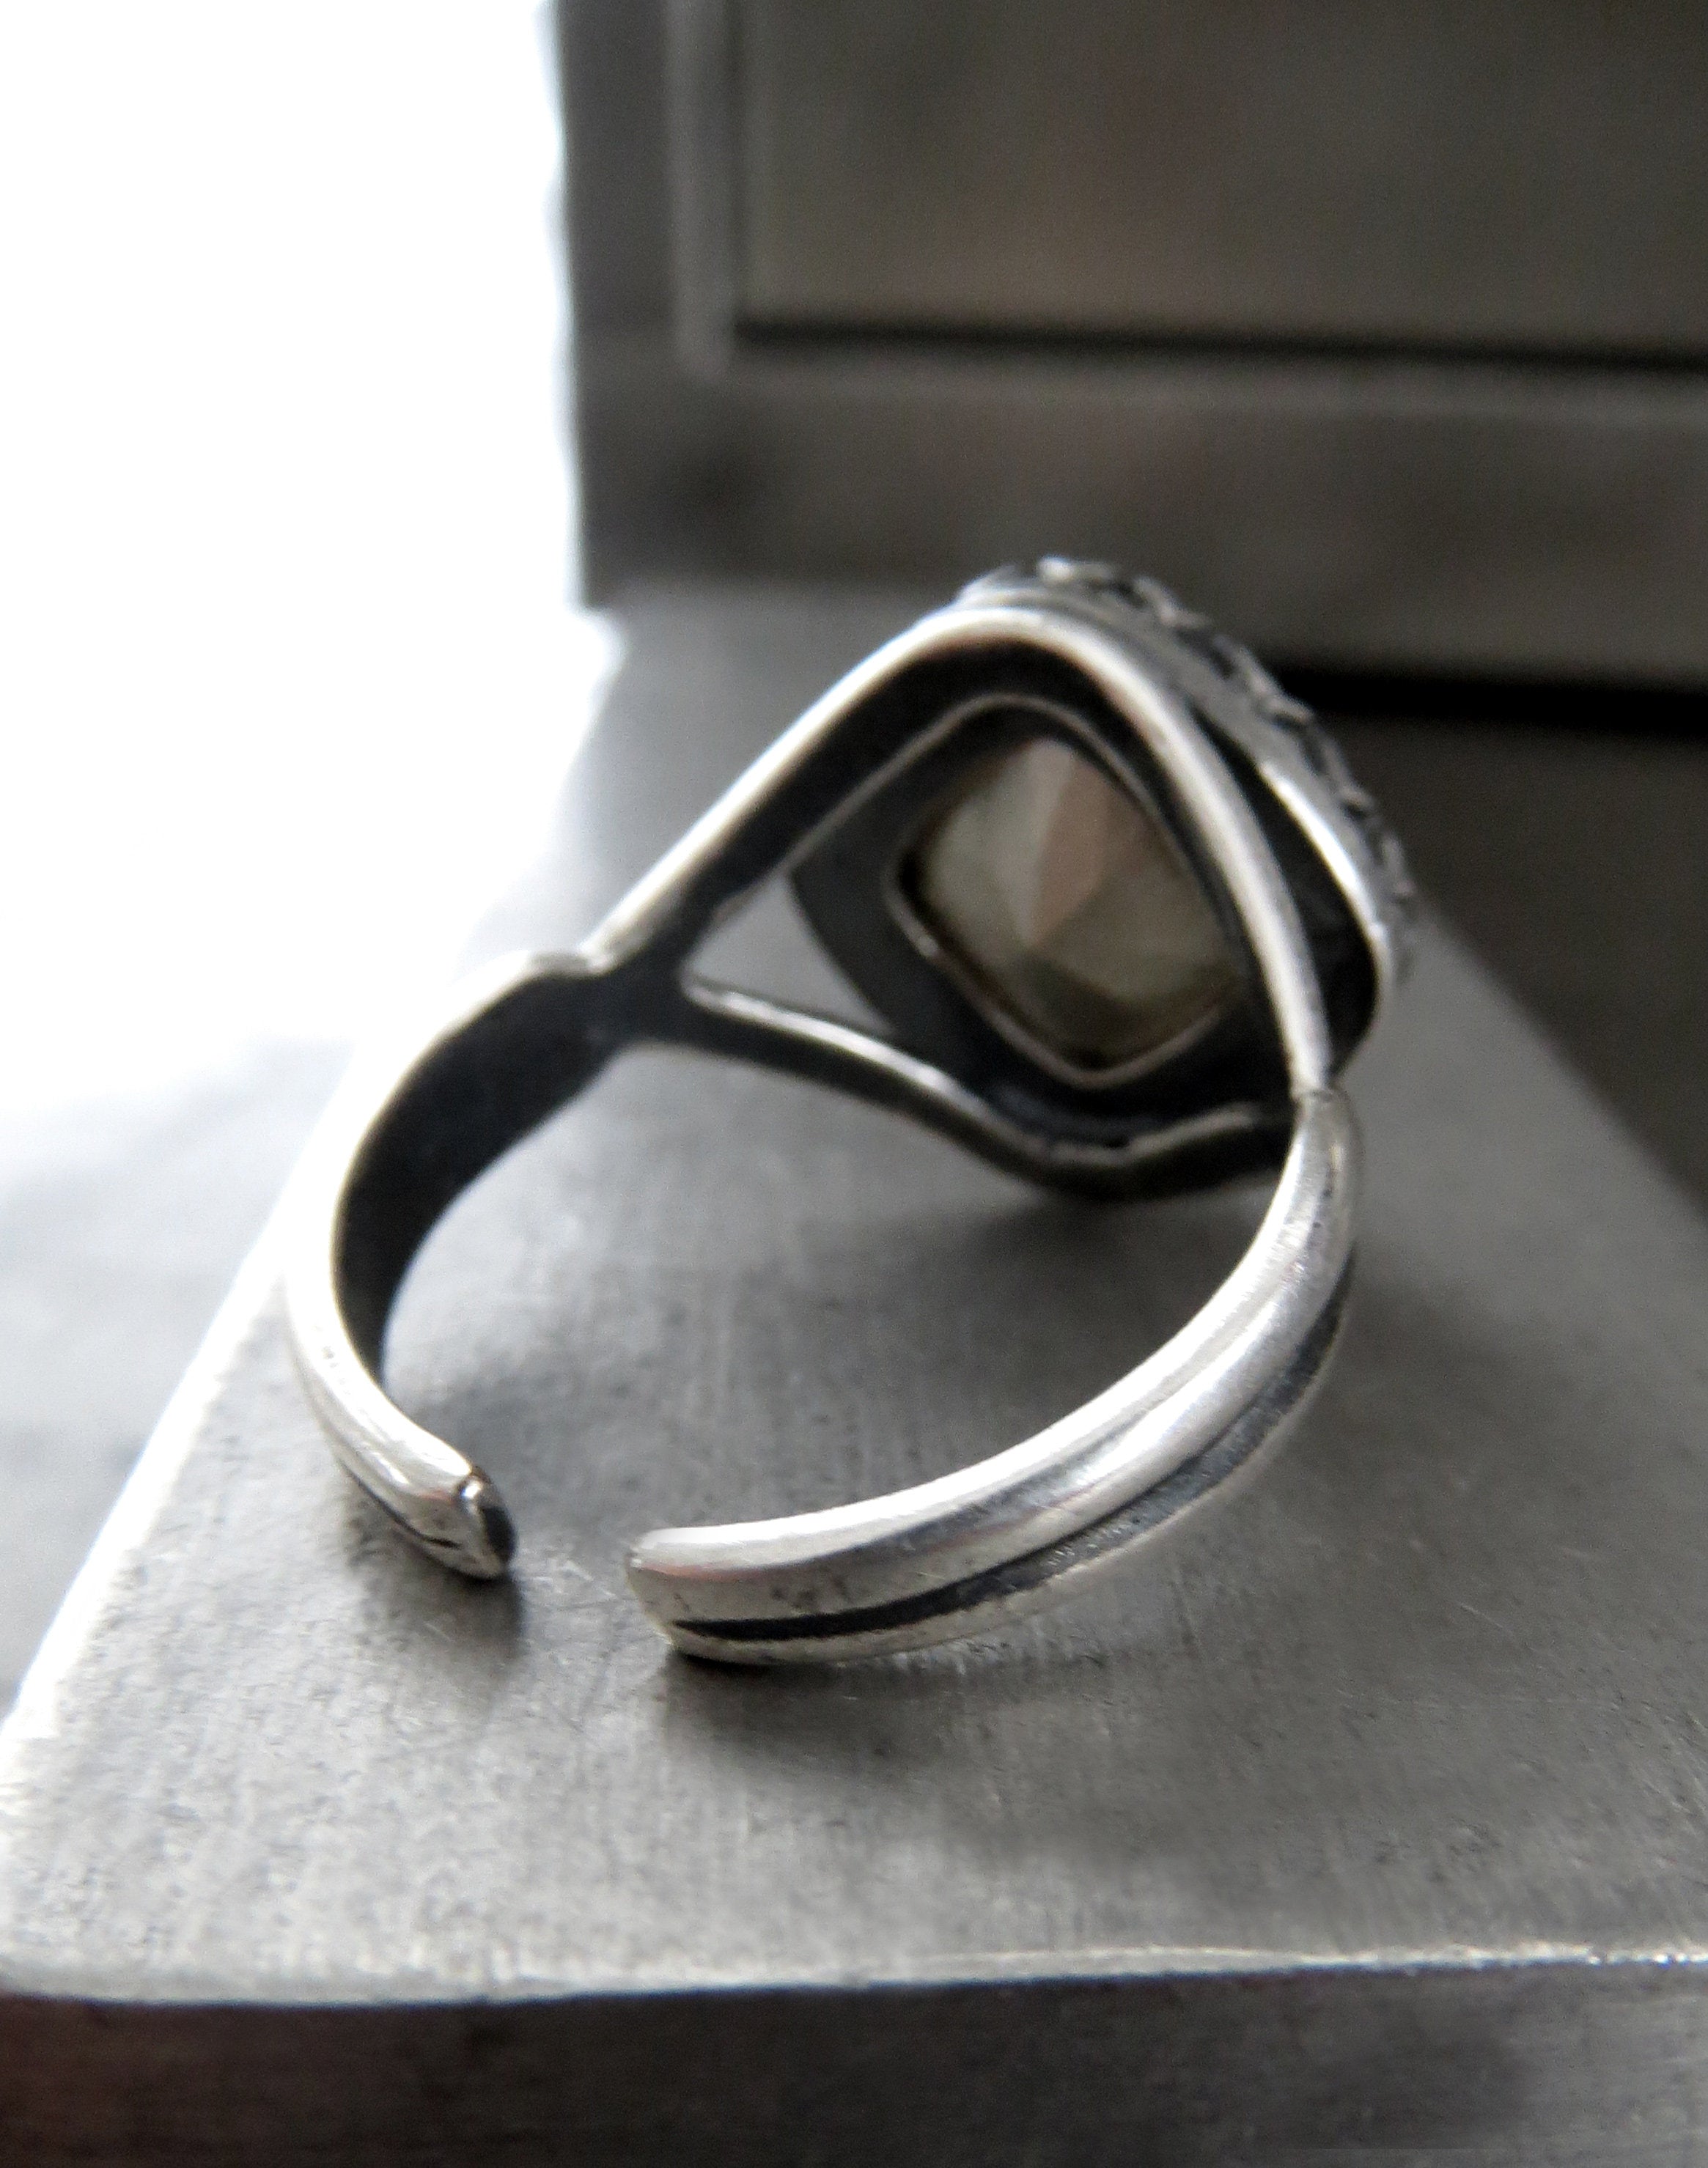 ETERNITY - Romantic Black Diamond Crystal Ring